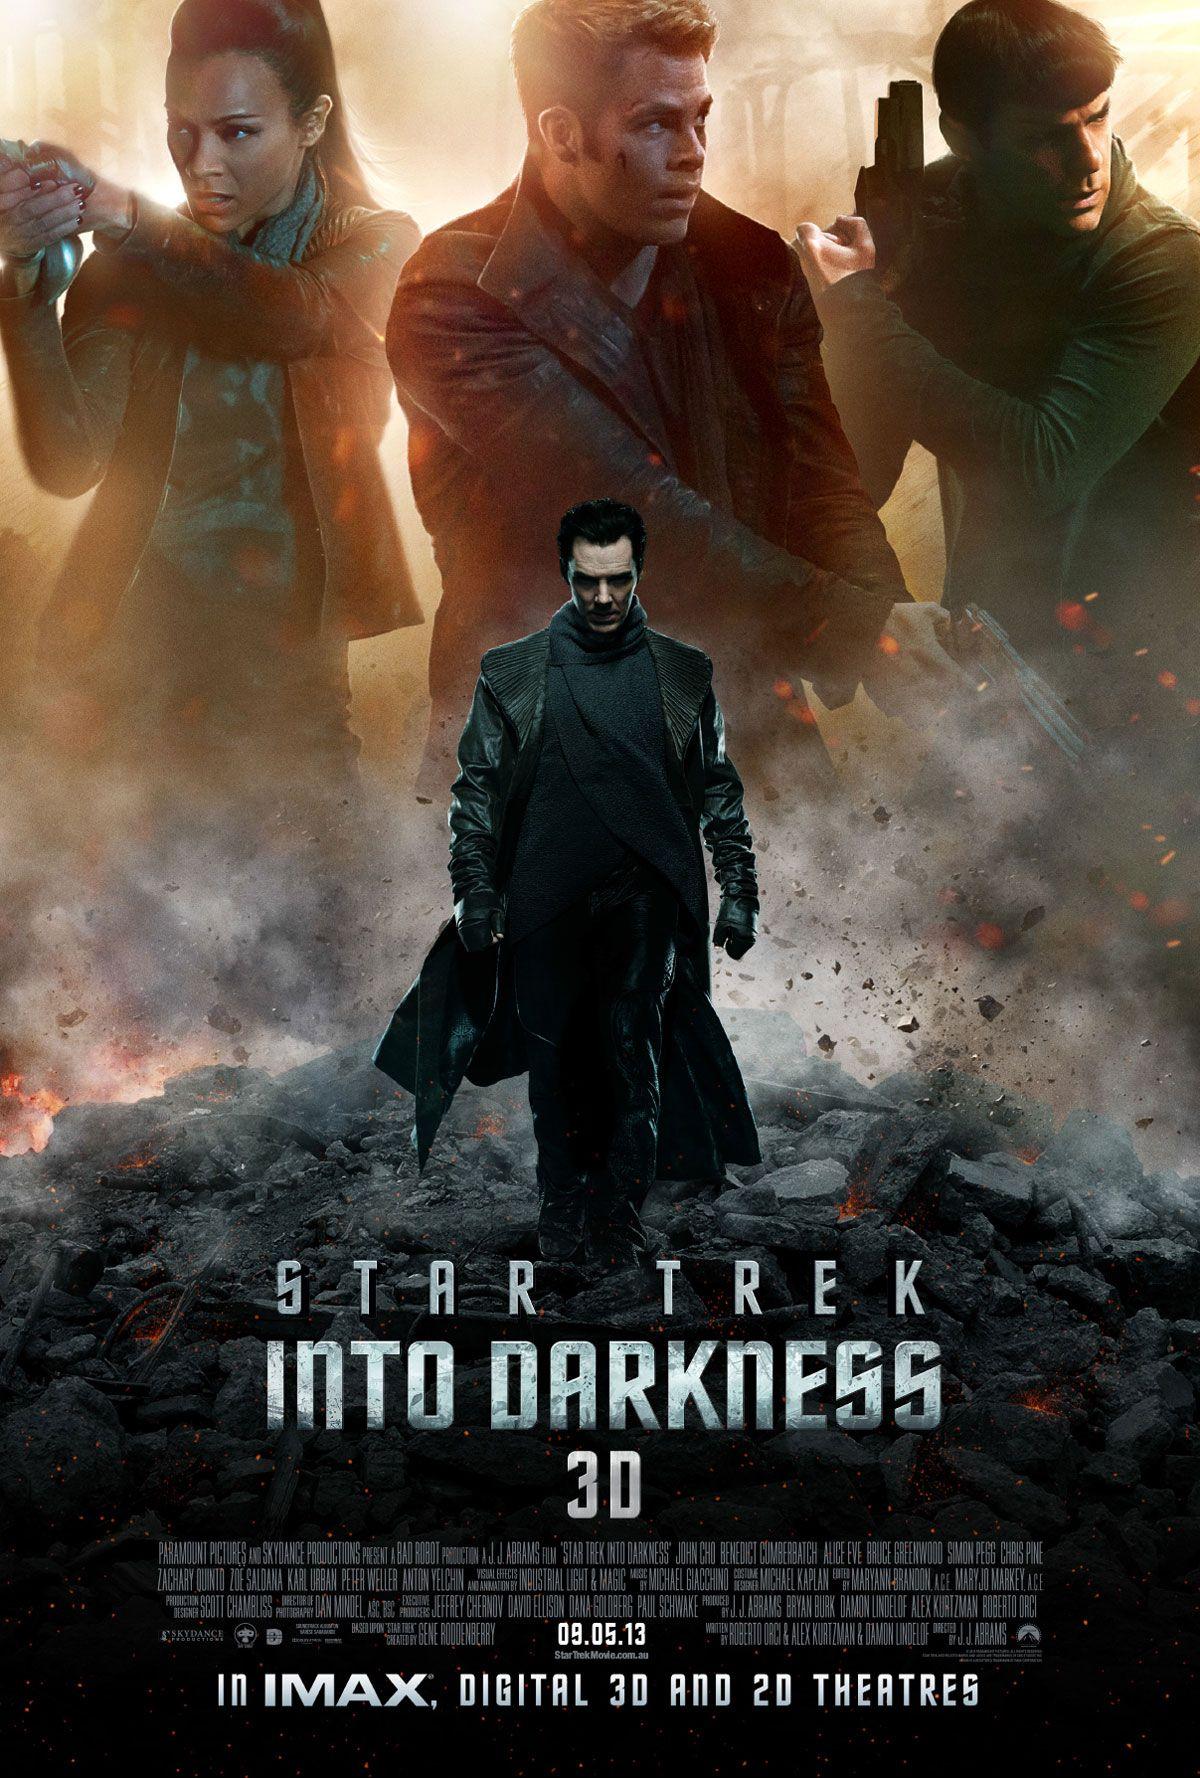 Star Trek Into Darkness (2013). Thinking about books